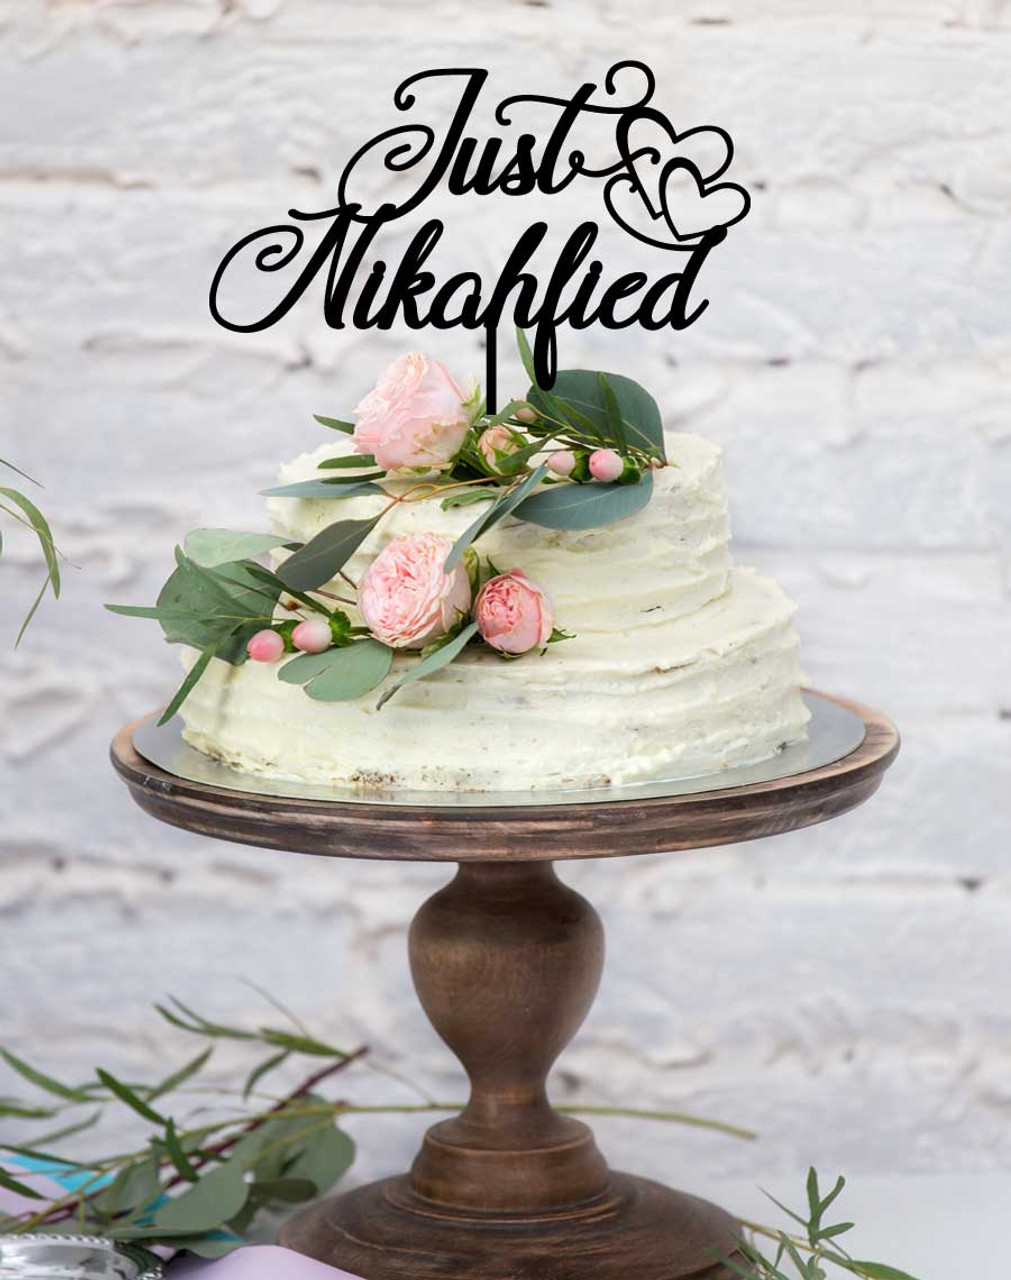 Muslim Wedding Cake - Etsy